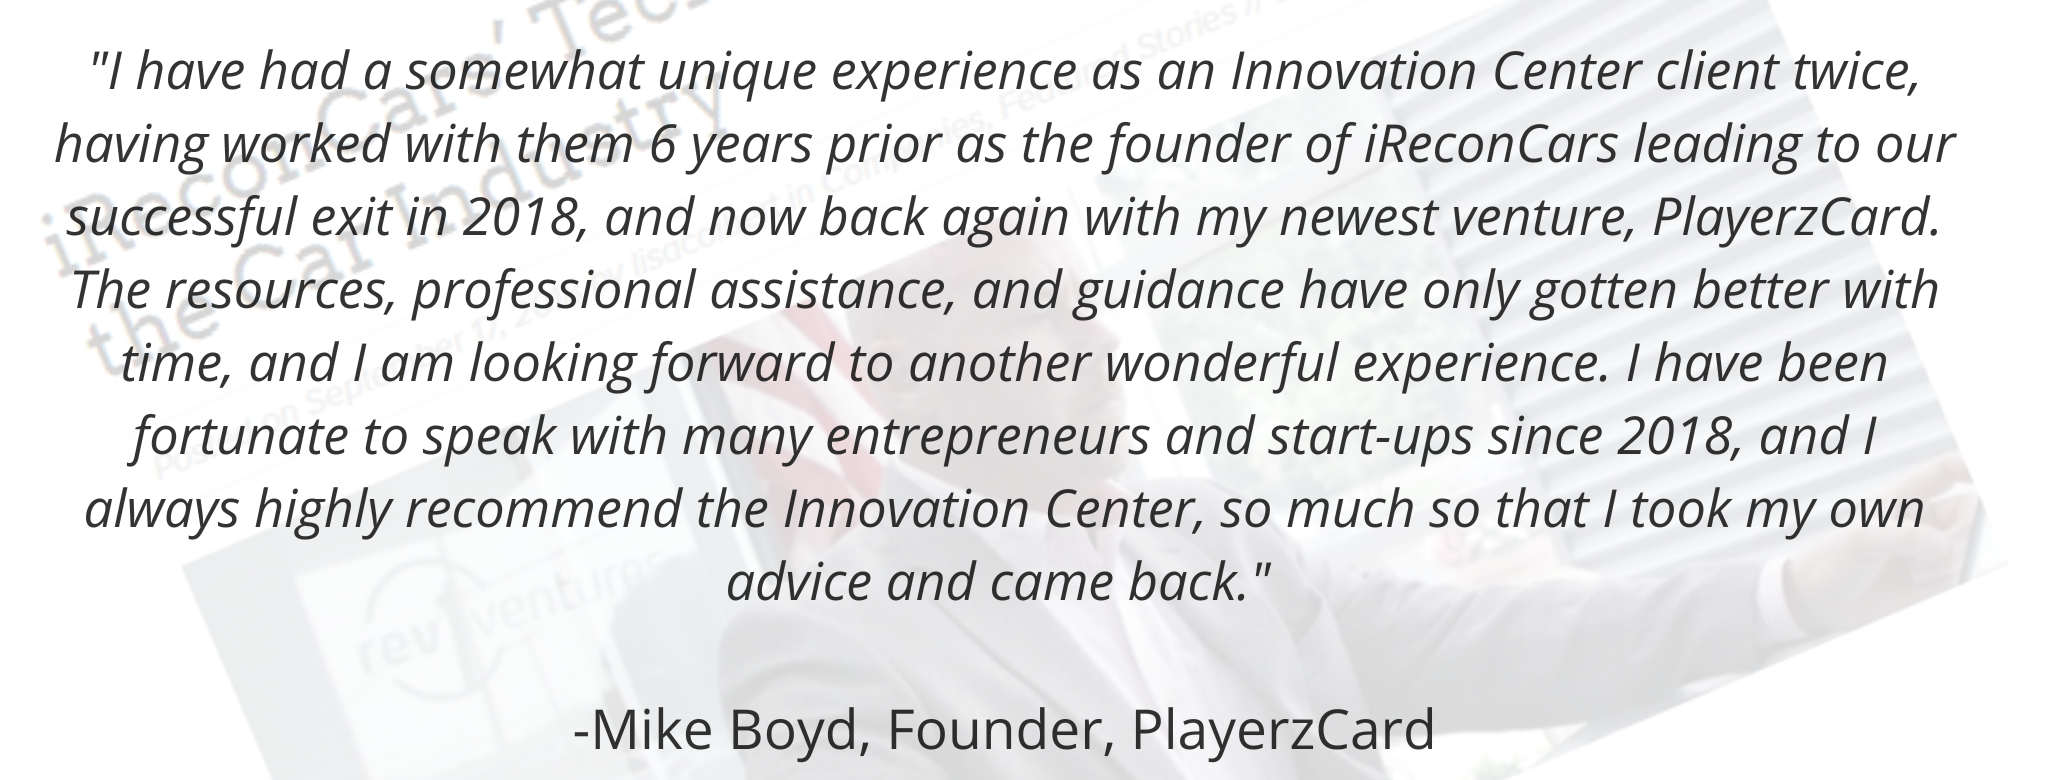 Mike Boyd Innovation Center Testimonial 